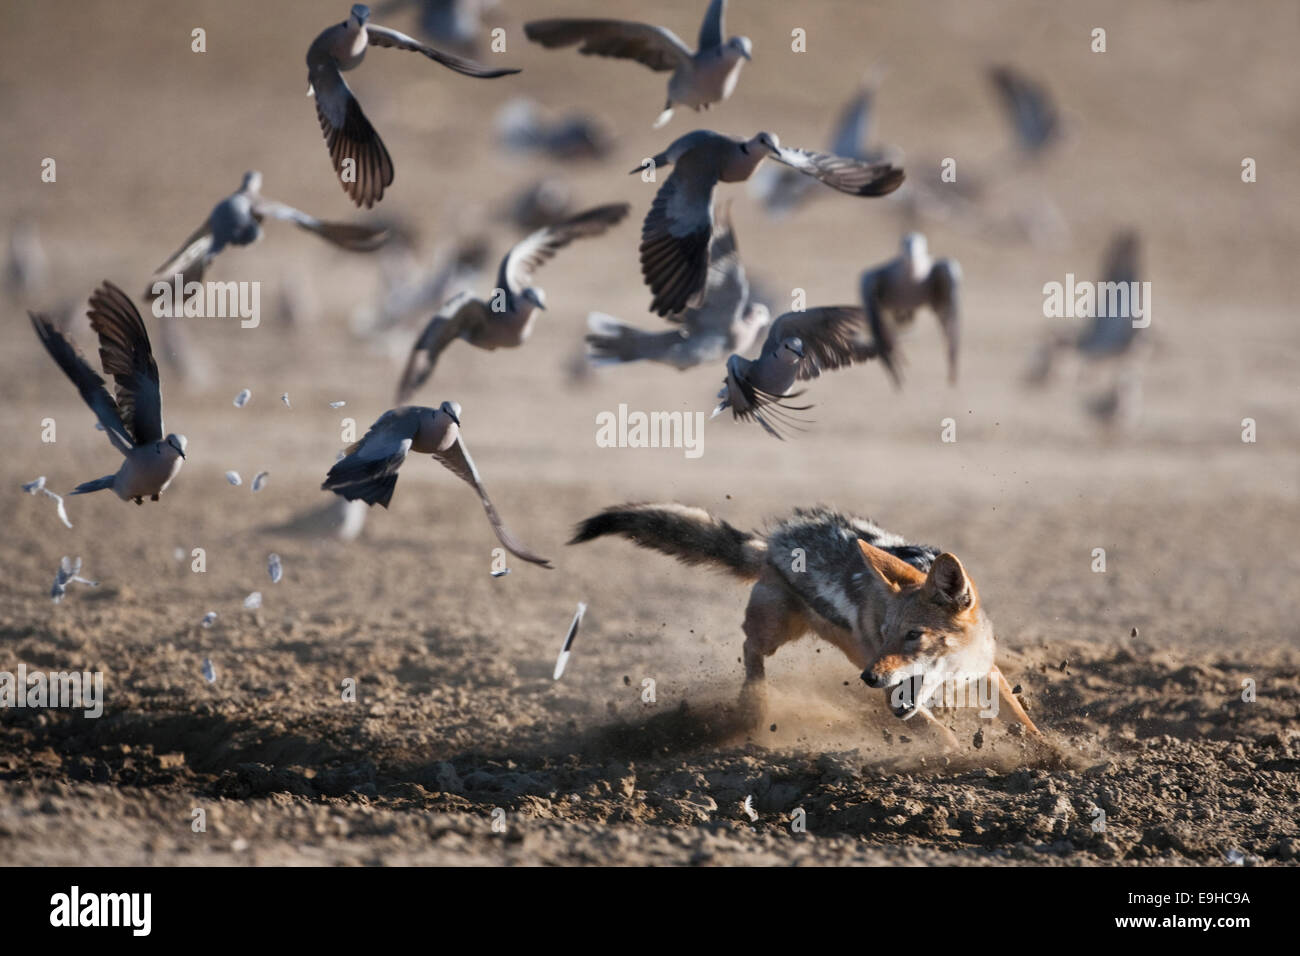 Blackbacked jackal, Canis mesomelas, chasing doves, Kgalagadi Transfrontier Park, South Africa Stock Photo